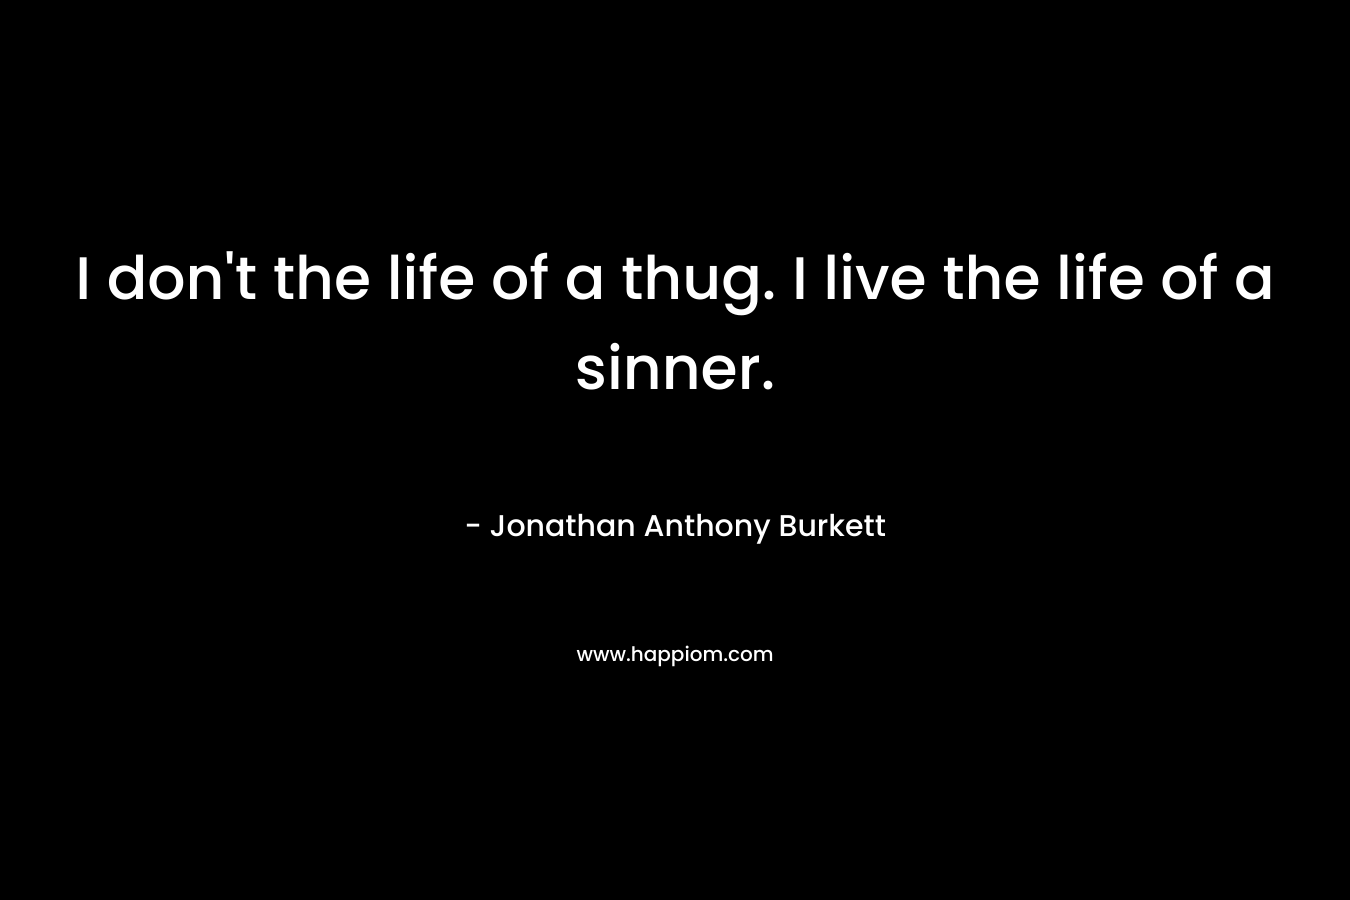 I don't the life of a thug. I live the life of a sinner.